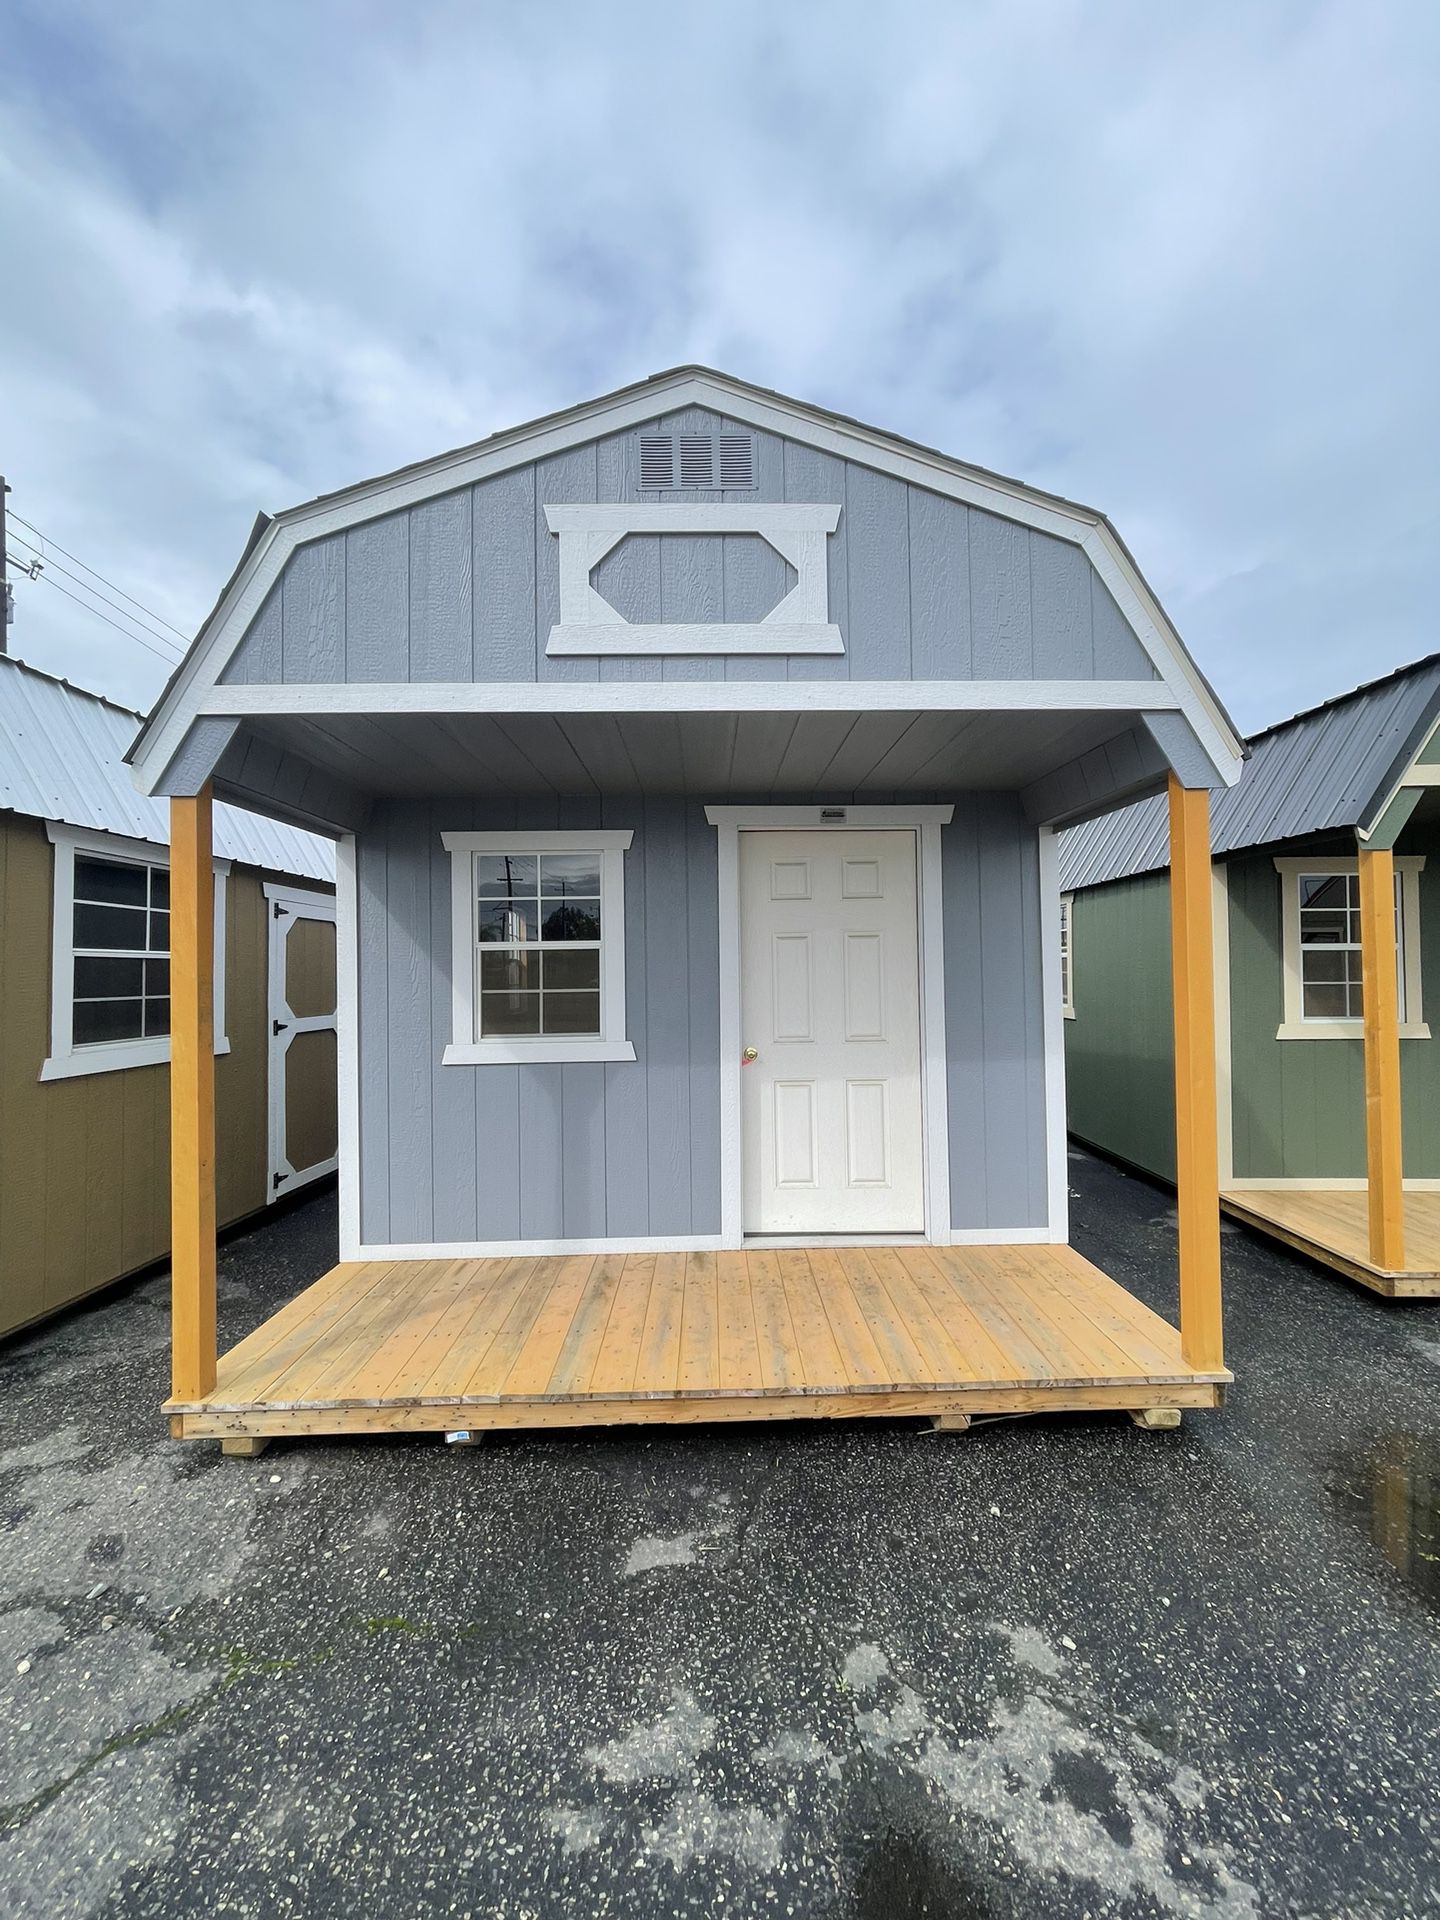 12x24 Tiny House Lofted Barn Shed Playhouse Storage